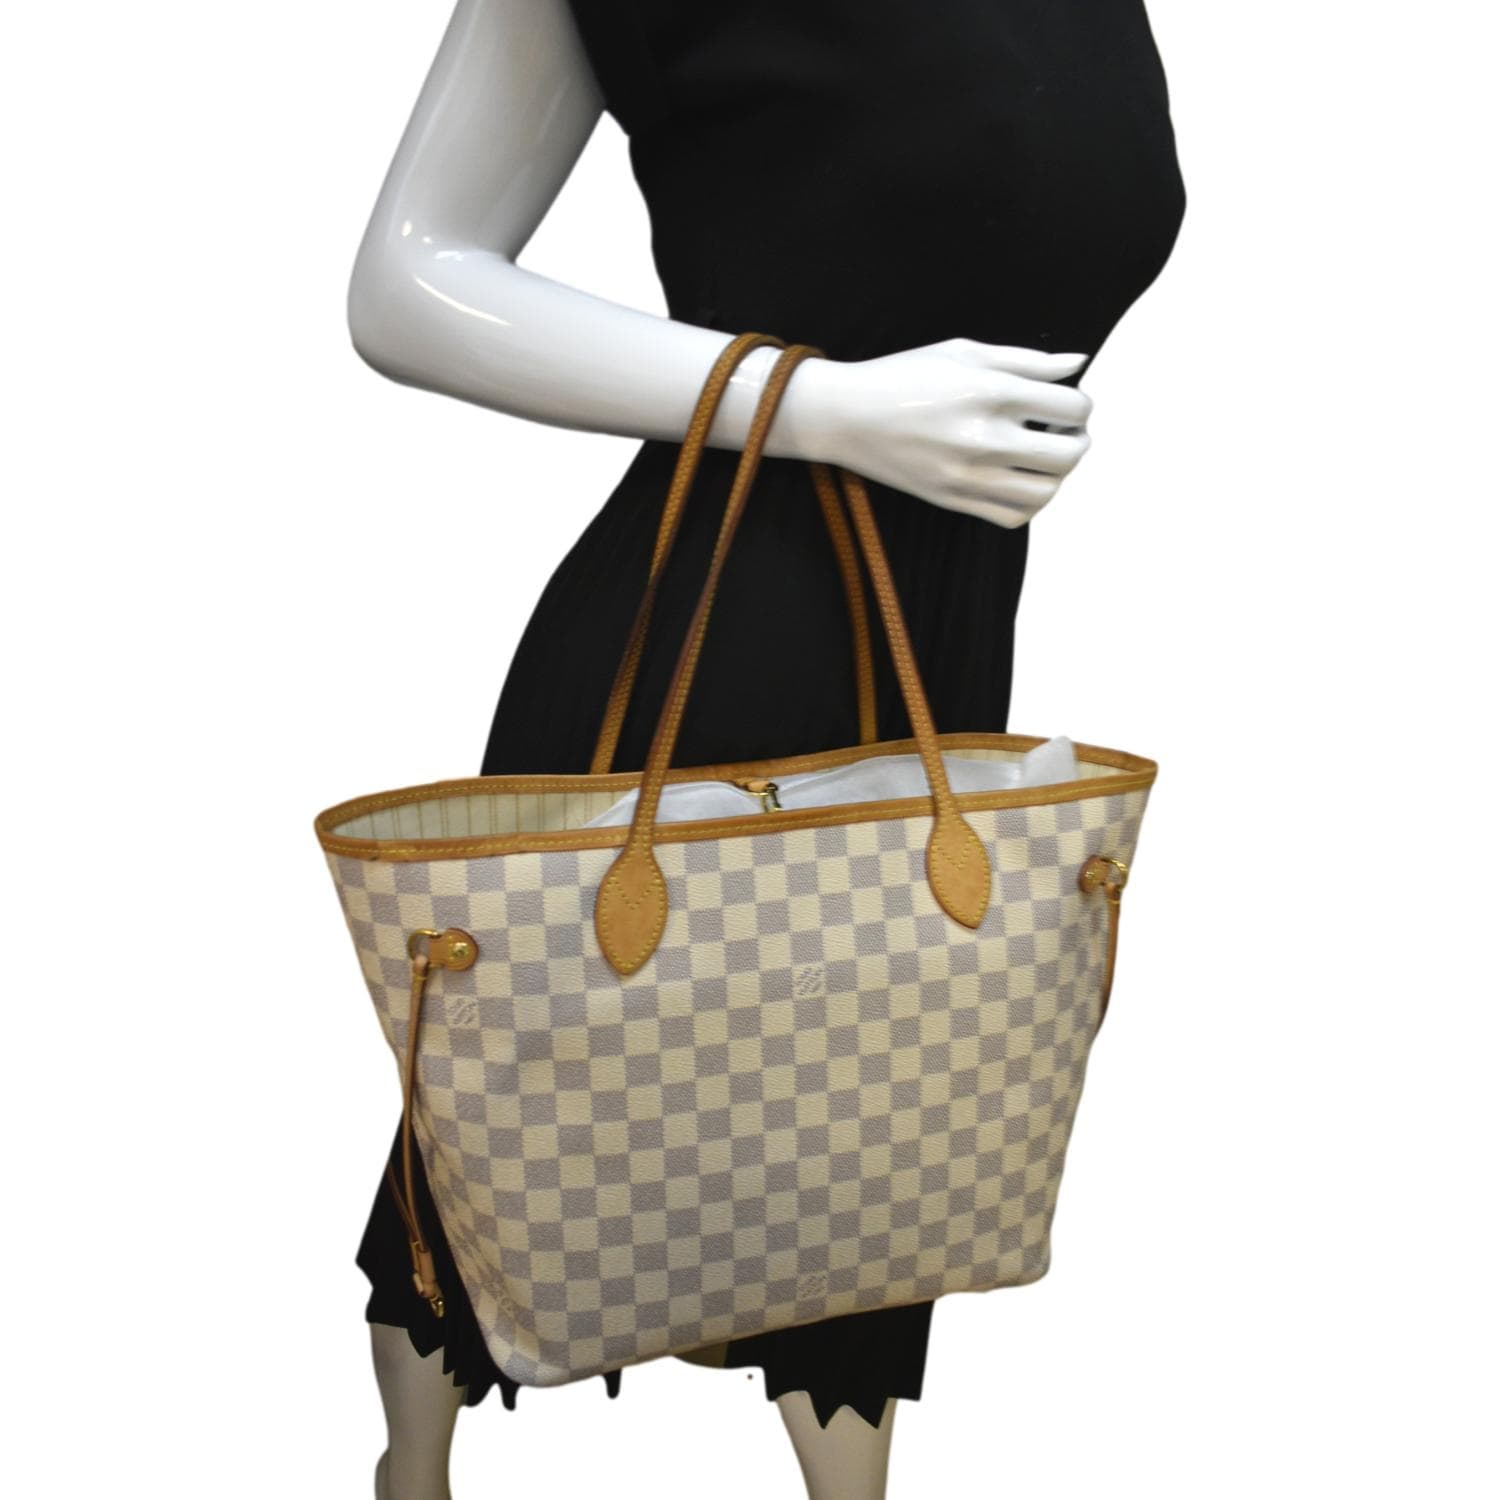 Louis Vuitton Neverfull MM Damier Azur White Shoulder Bag